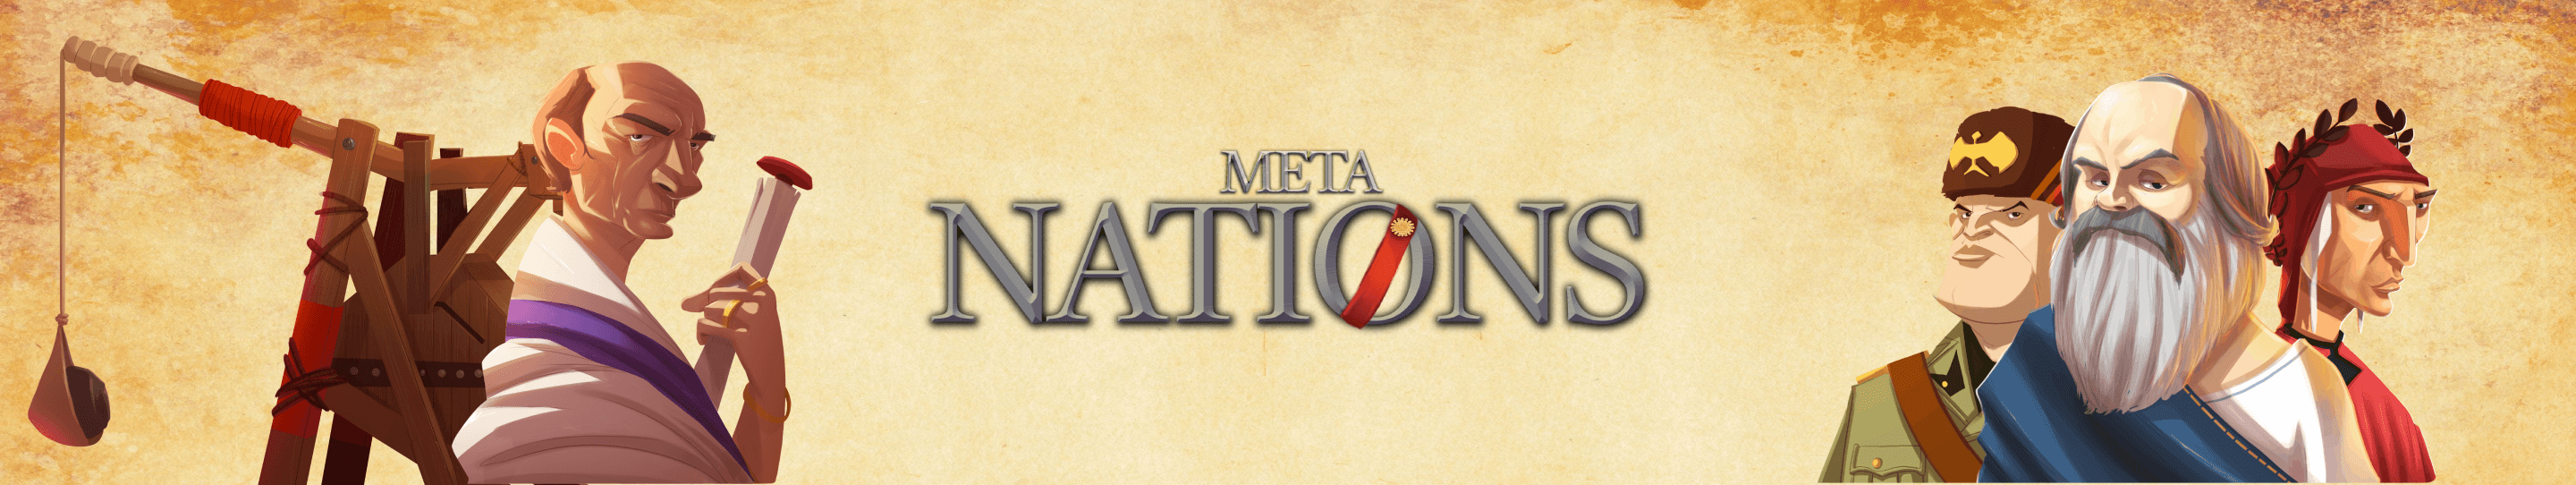 Meta_Nations 横幅